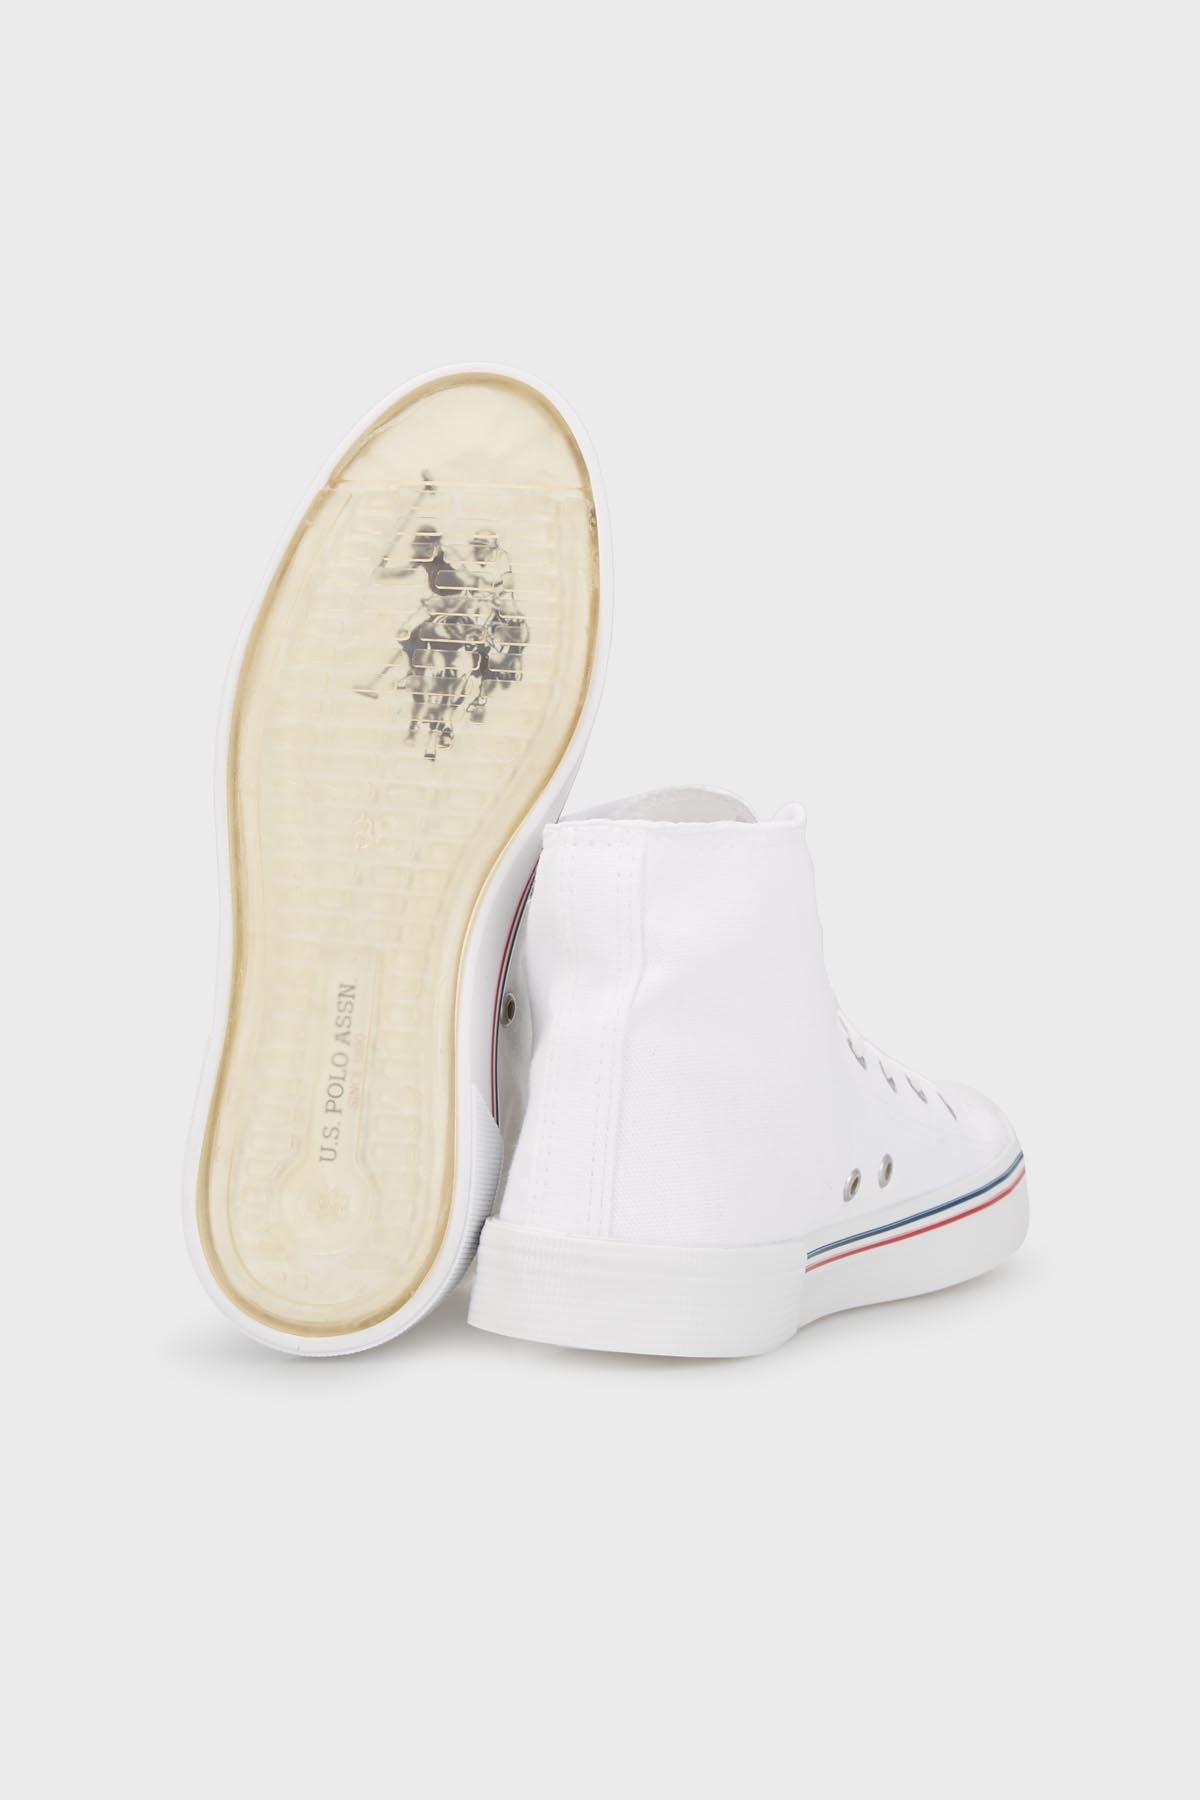 U.S. Polo Assn Bilekli Sneaker Bayan Ayakkabı PENELOPE HIGH 3FX BEYAZ